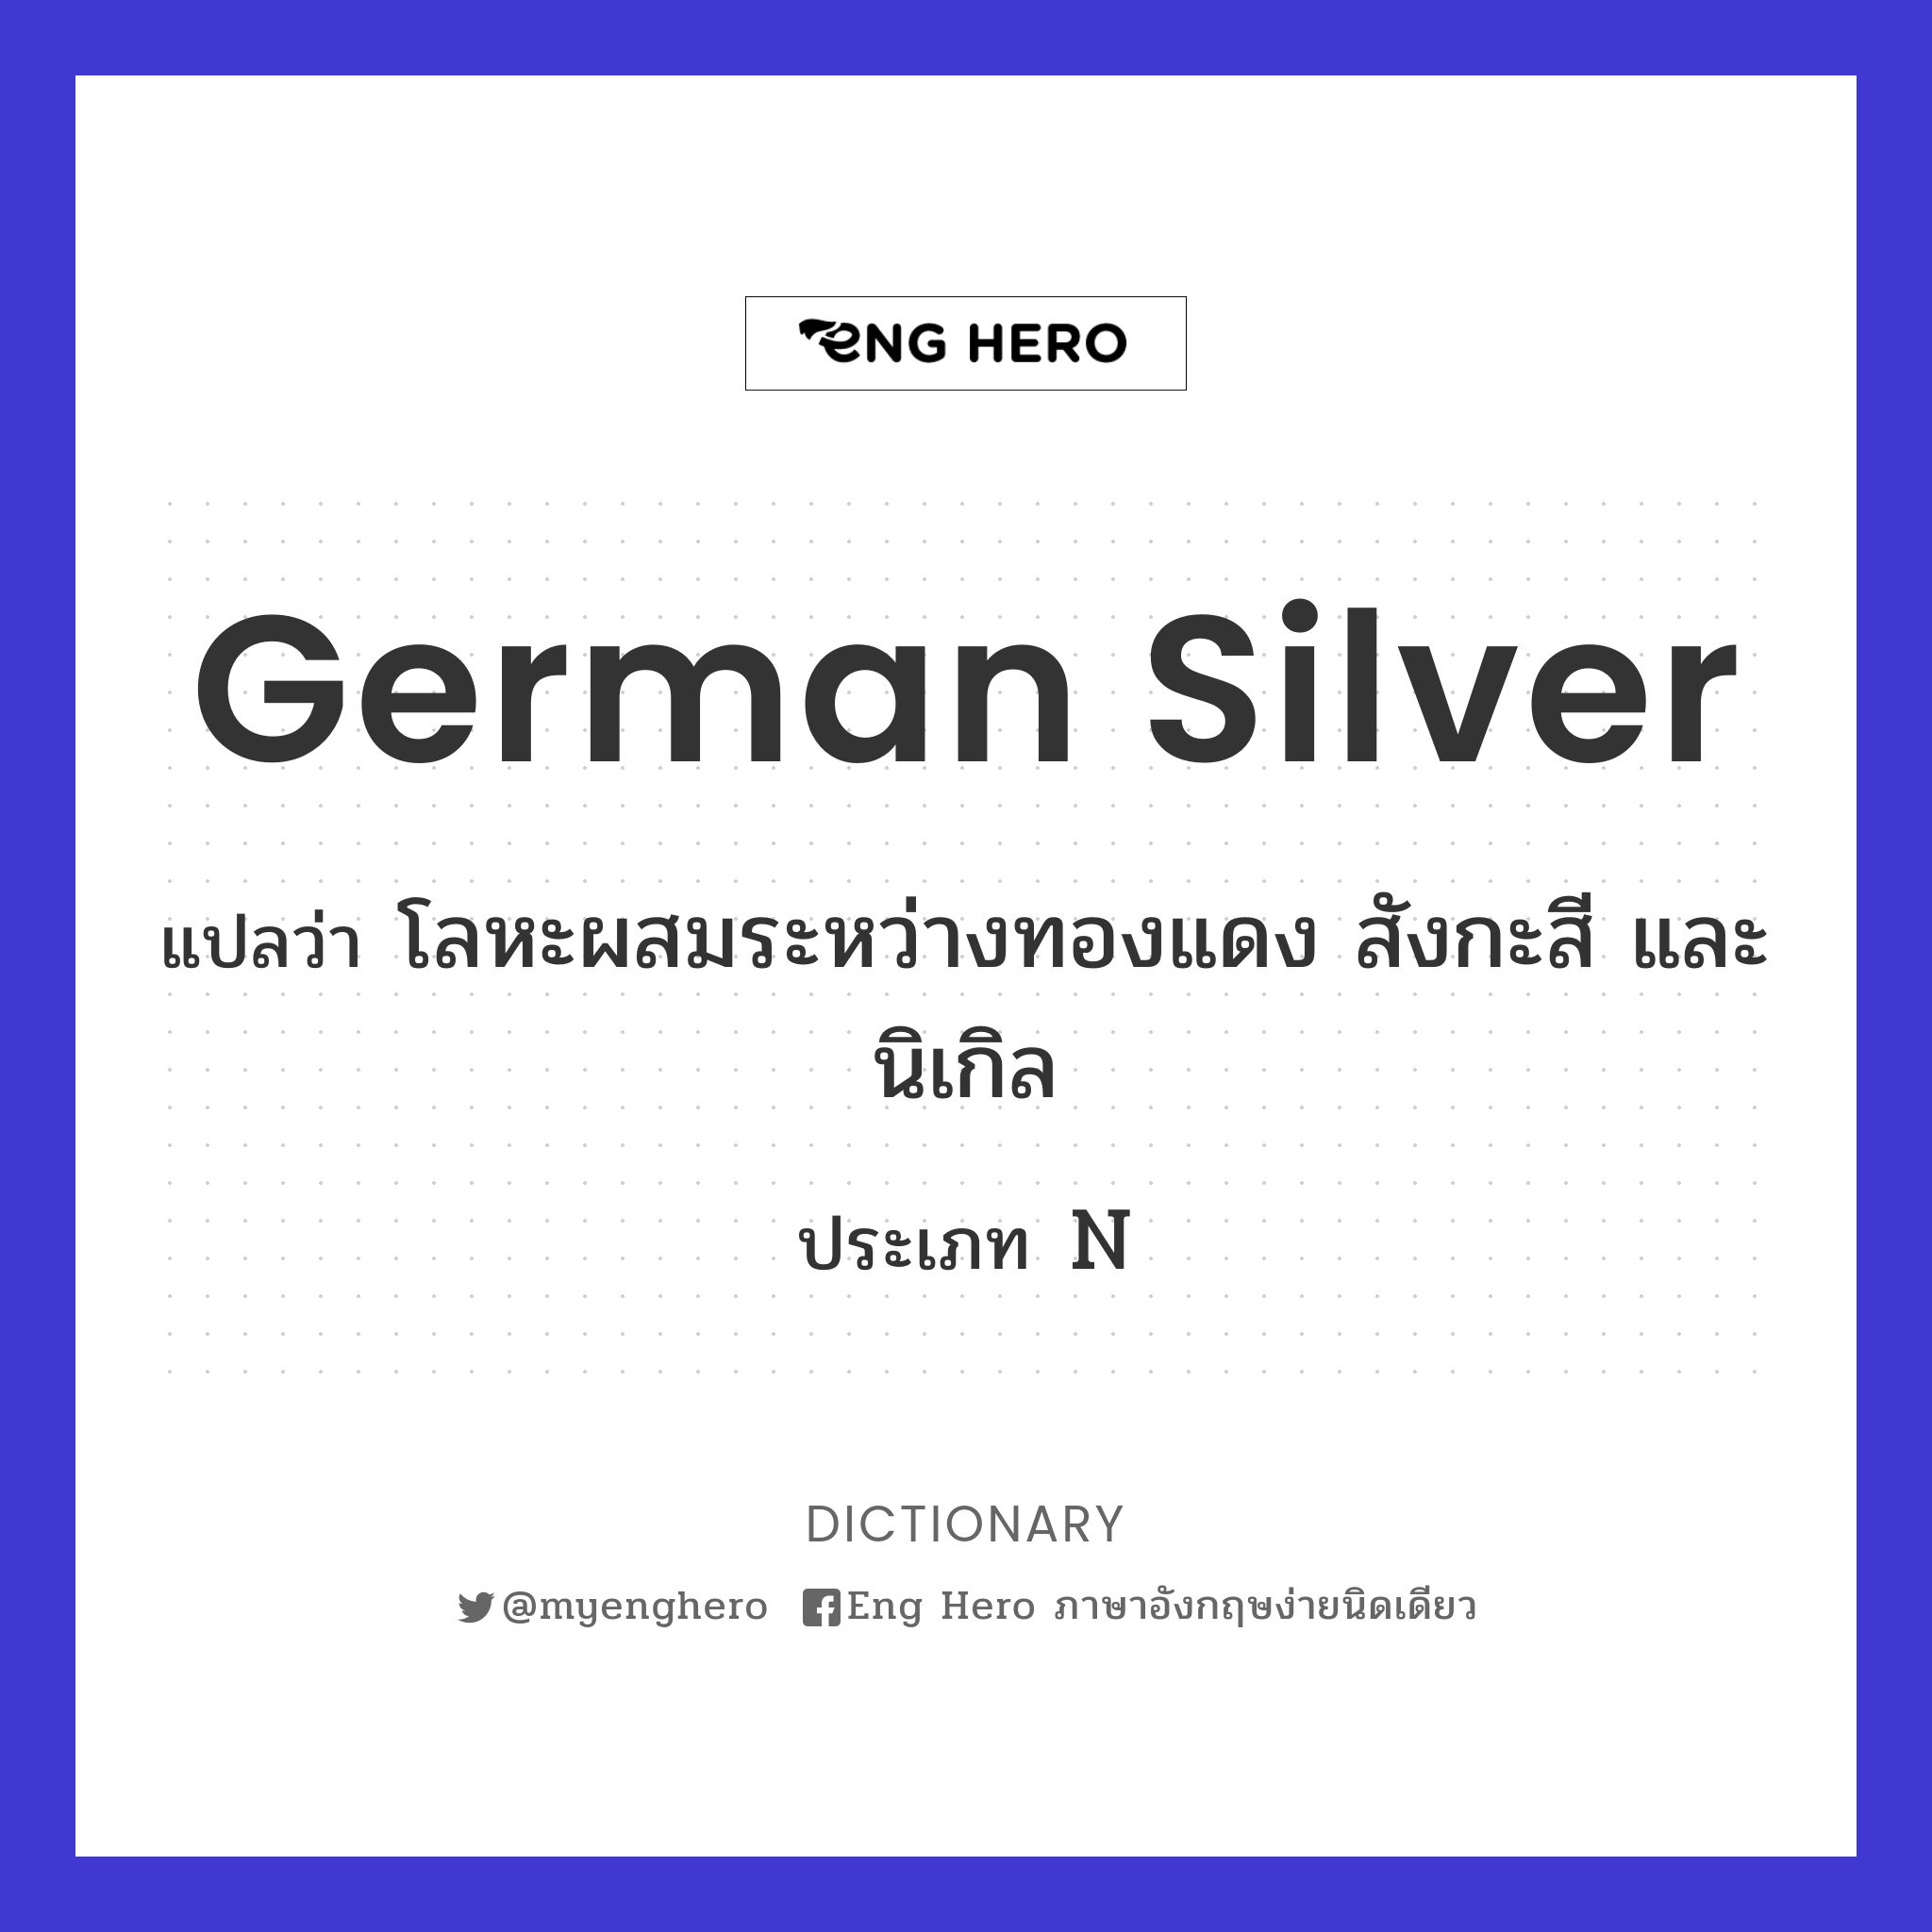 German silver